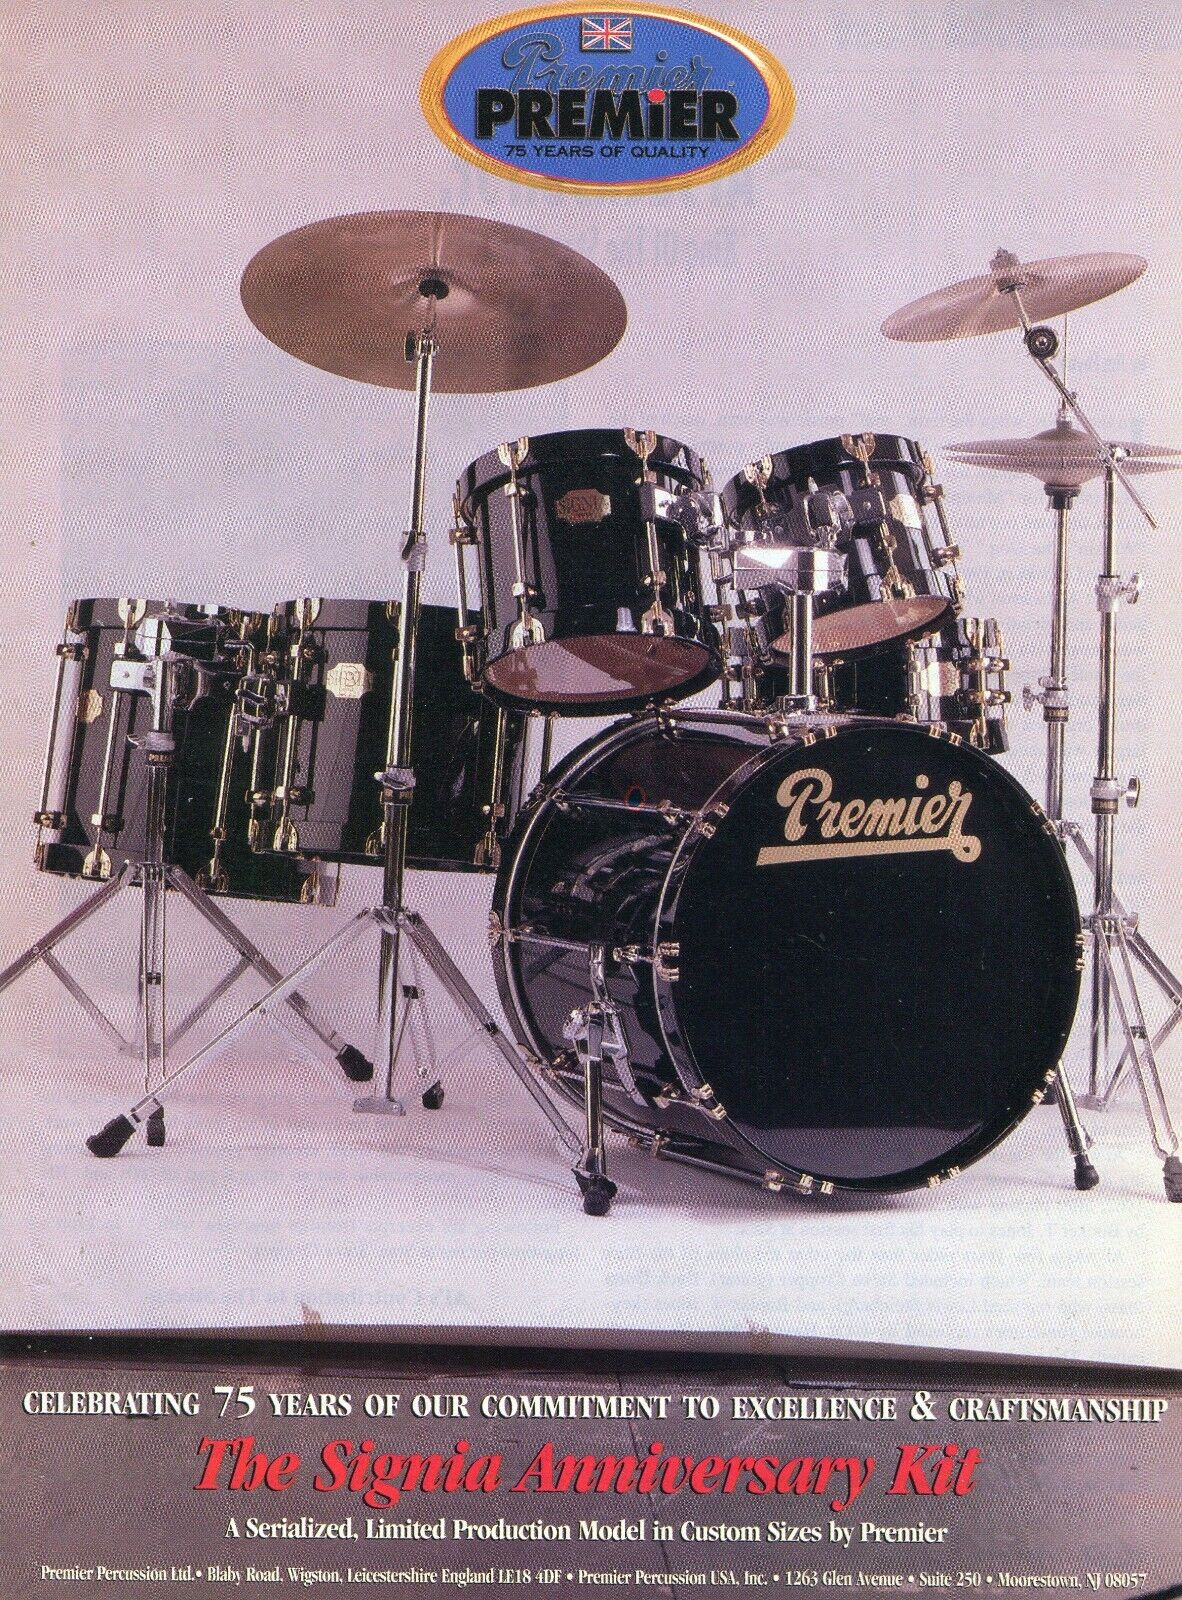 1997 Print Ad of Premier Signia Anniversary Drum Kit Celebrating 75 Years